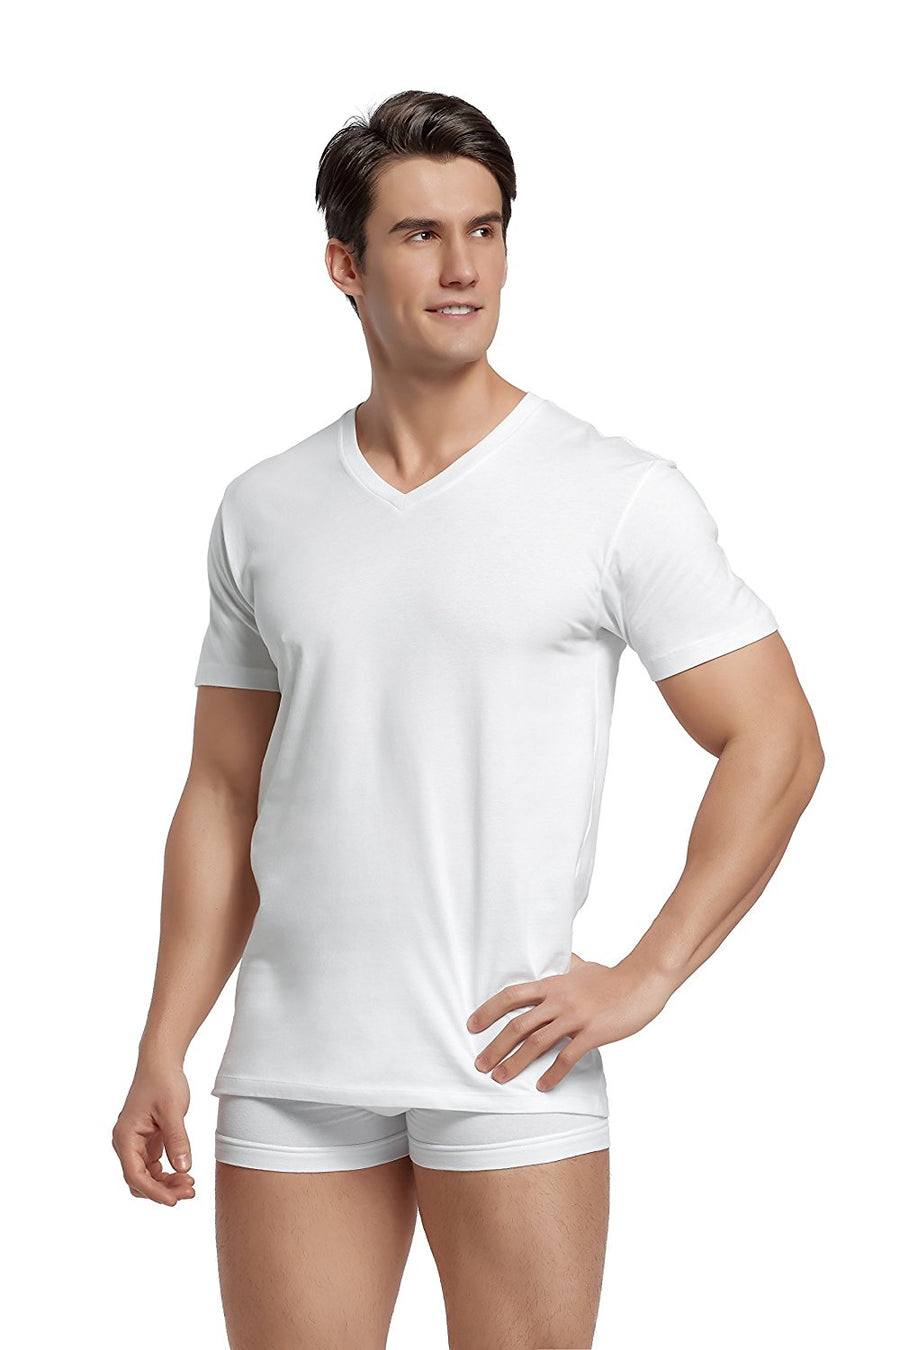 CYZ Men's V-Neck T-Shirt Pack of 3 100% Cotton